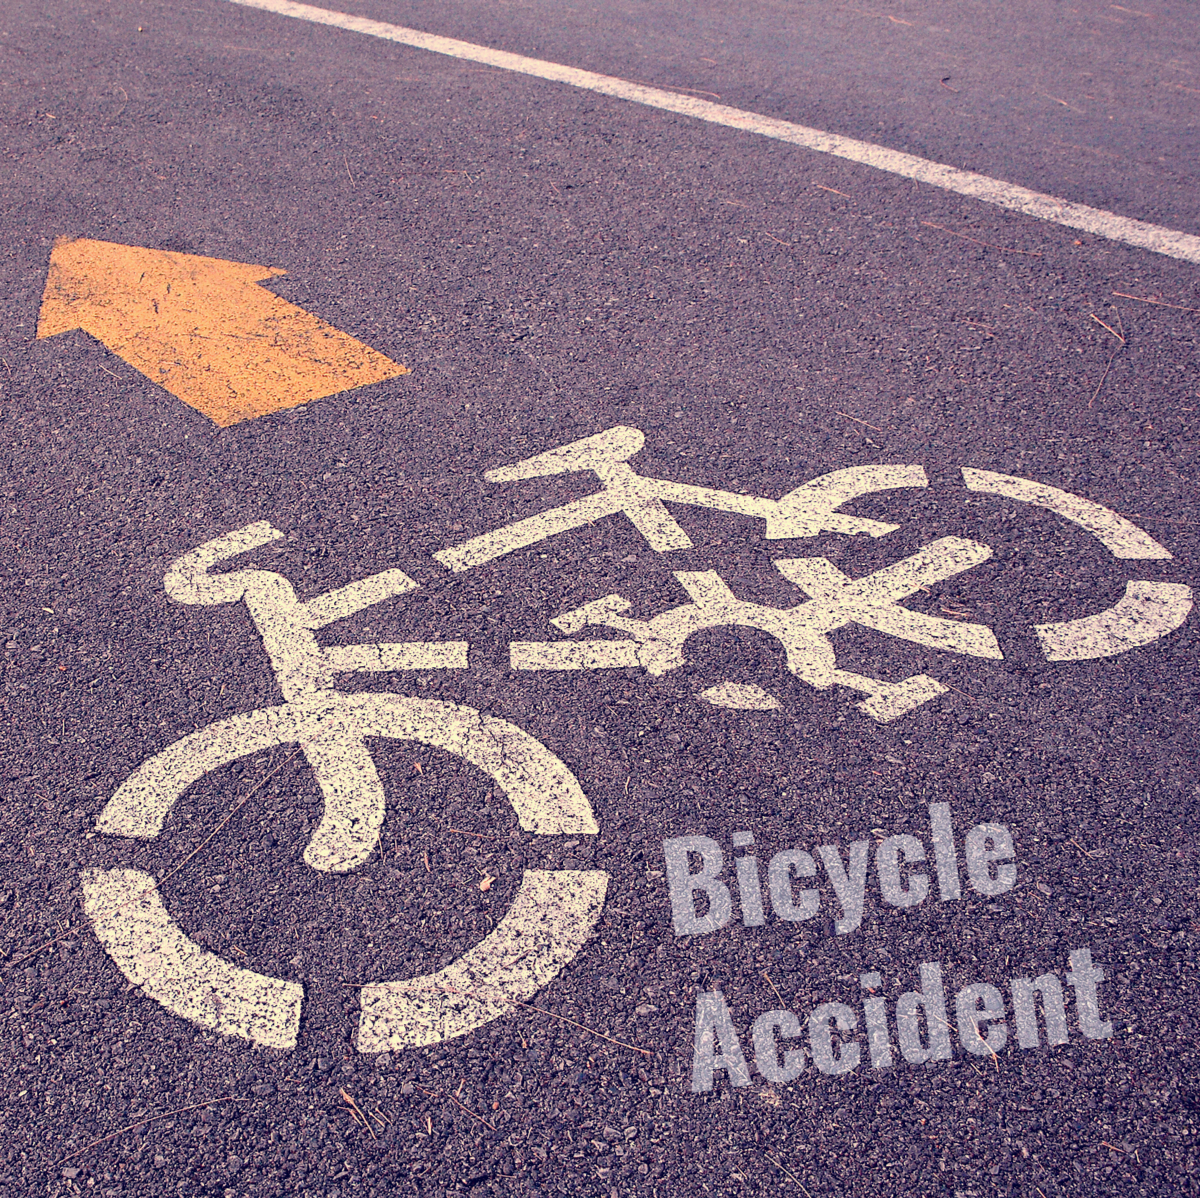 Lemon Hills Bicycle Accident Franklin Boulevard Near 47th Avenue